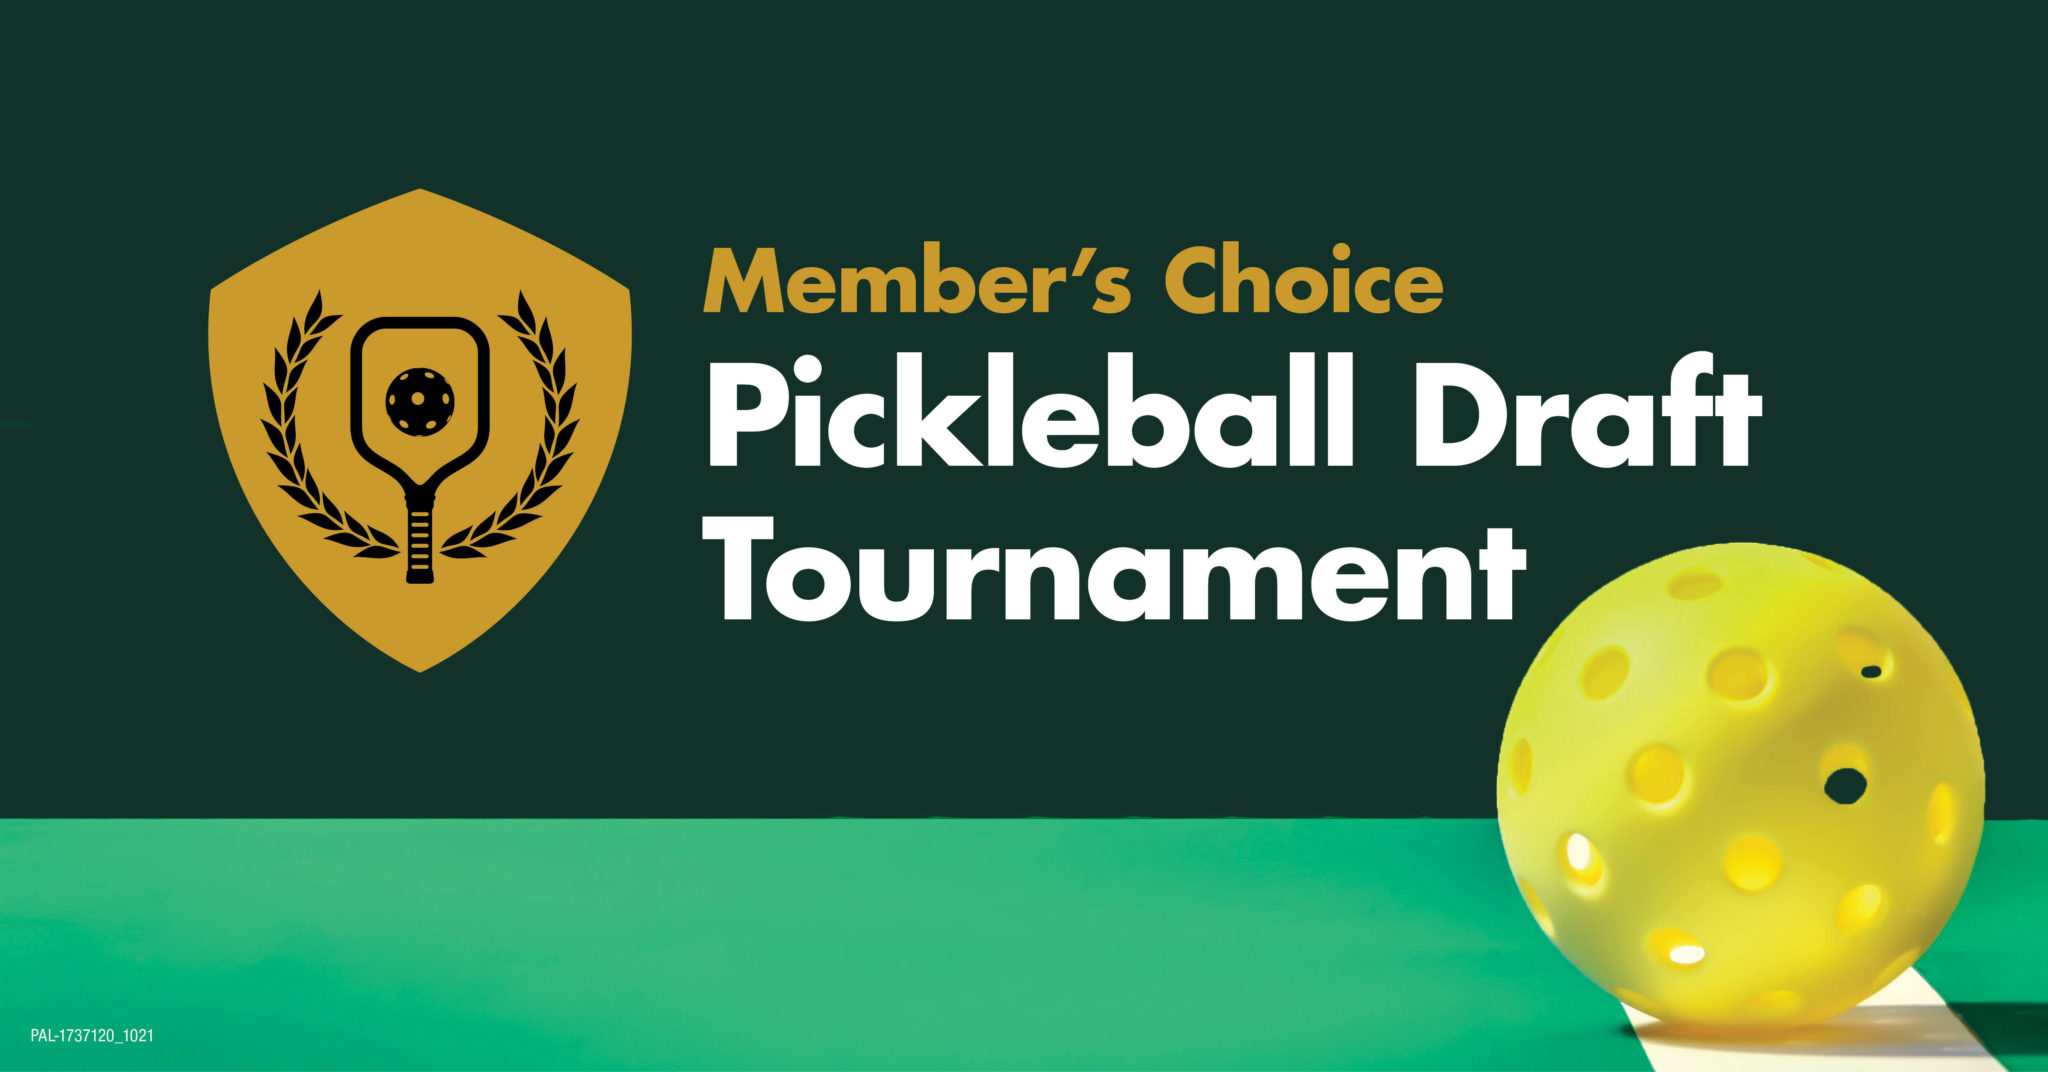 Member's Choice Pickleball Draft Tournament